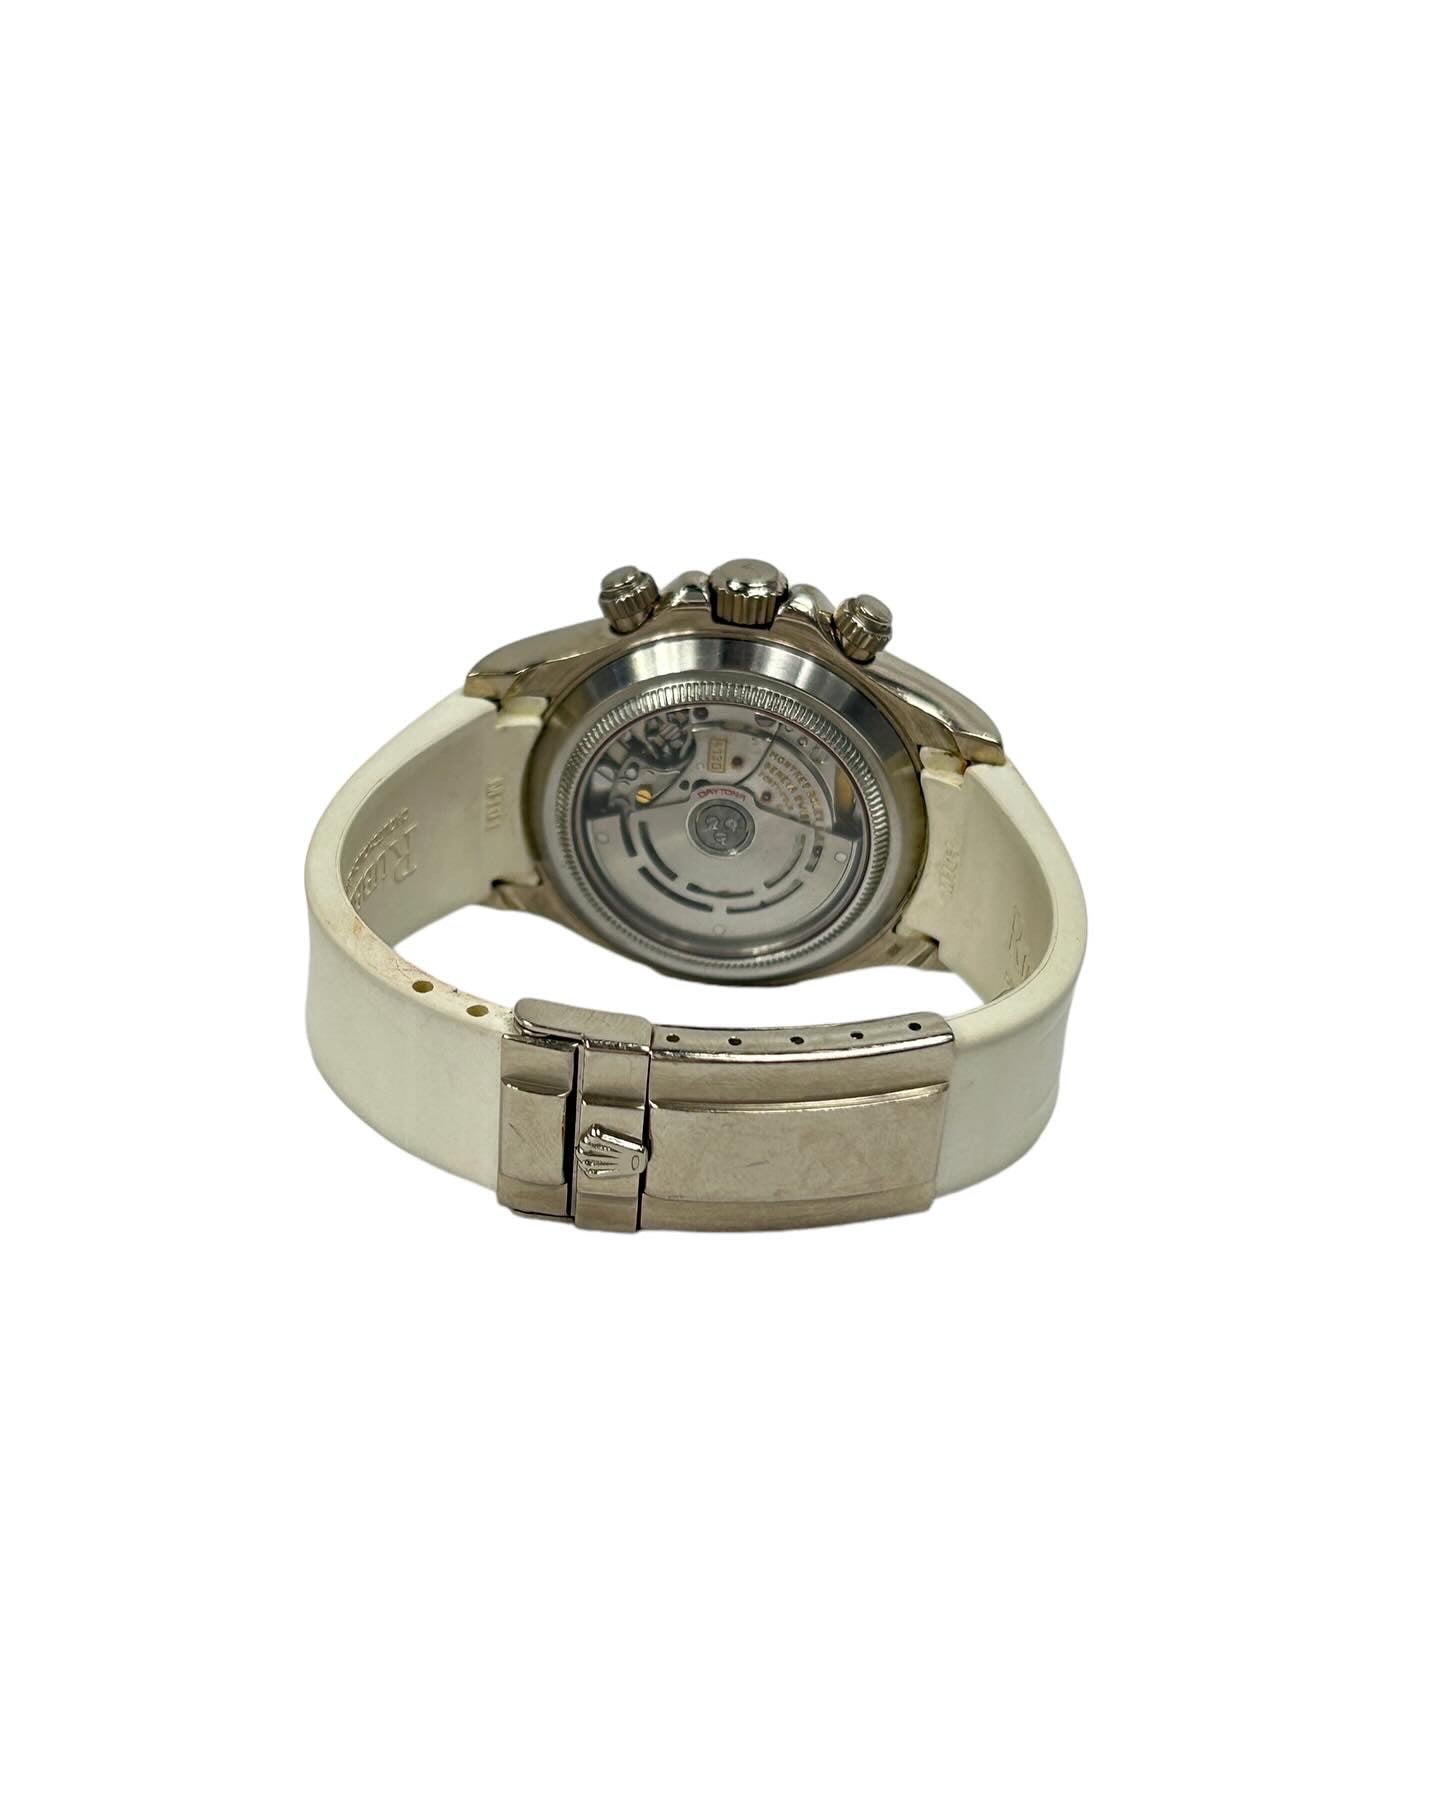 Daytona 18K White Gold Emerald Cut Diamond Cosmograph Watch w/ Oysterflex White Rubber Band